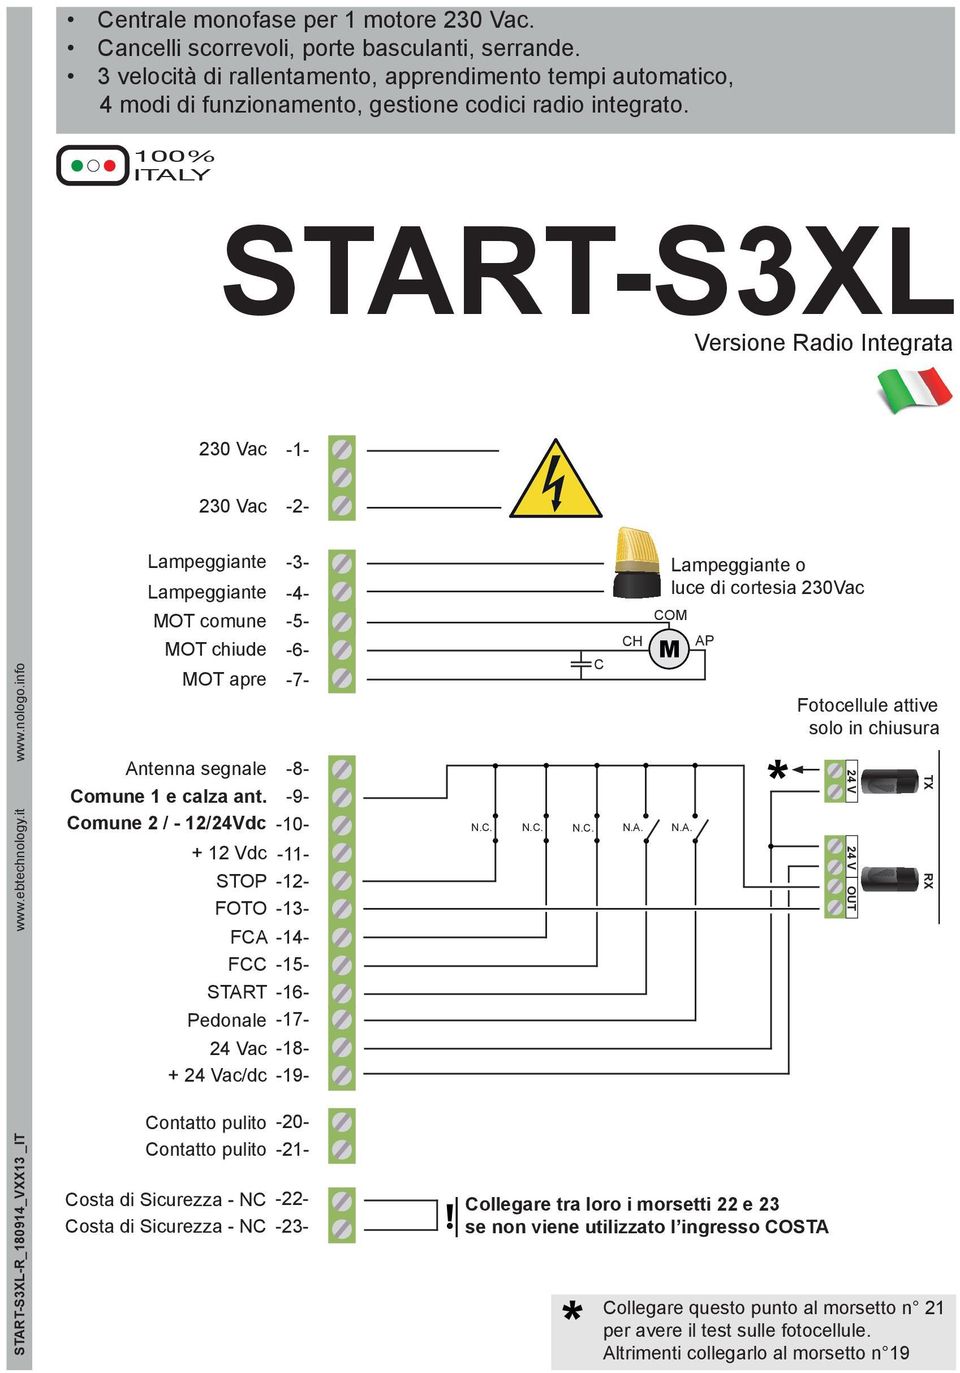 100% ITALY START-S3XL Versione Radio Integrata Versione Radio Integrata 230 Vac 230 Vac START-S3XL-R_180914_VXX13 _IT www.ebtechnology.it www.nologo.